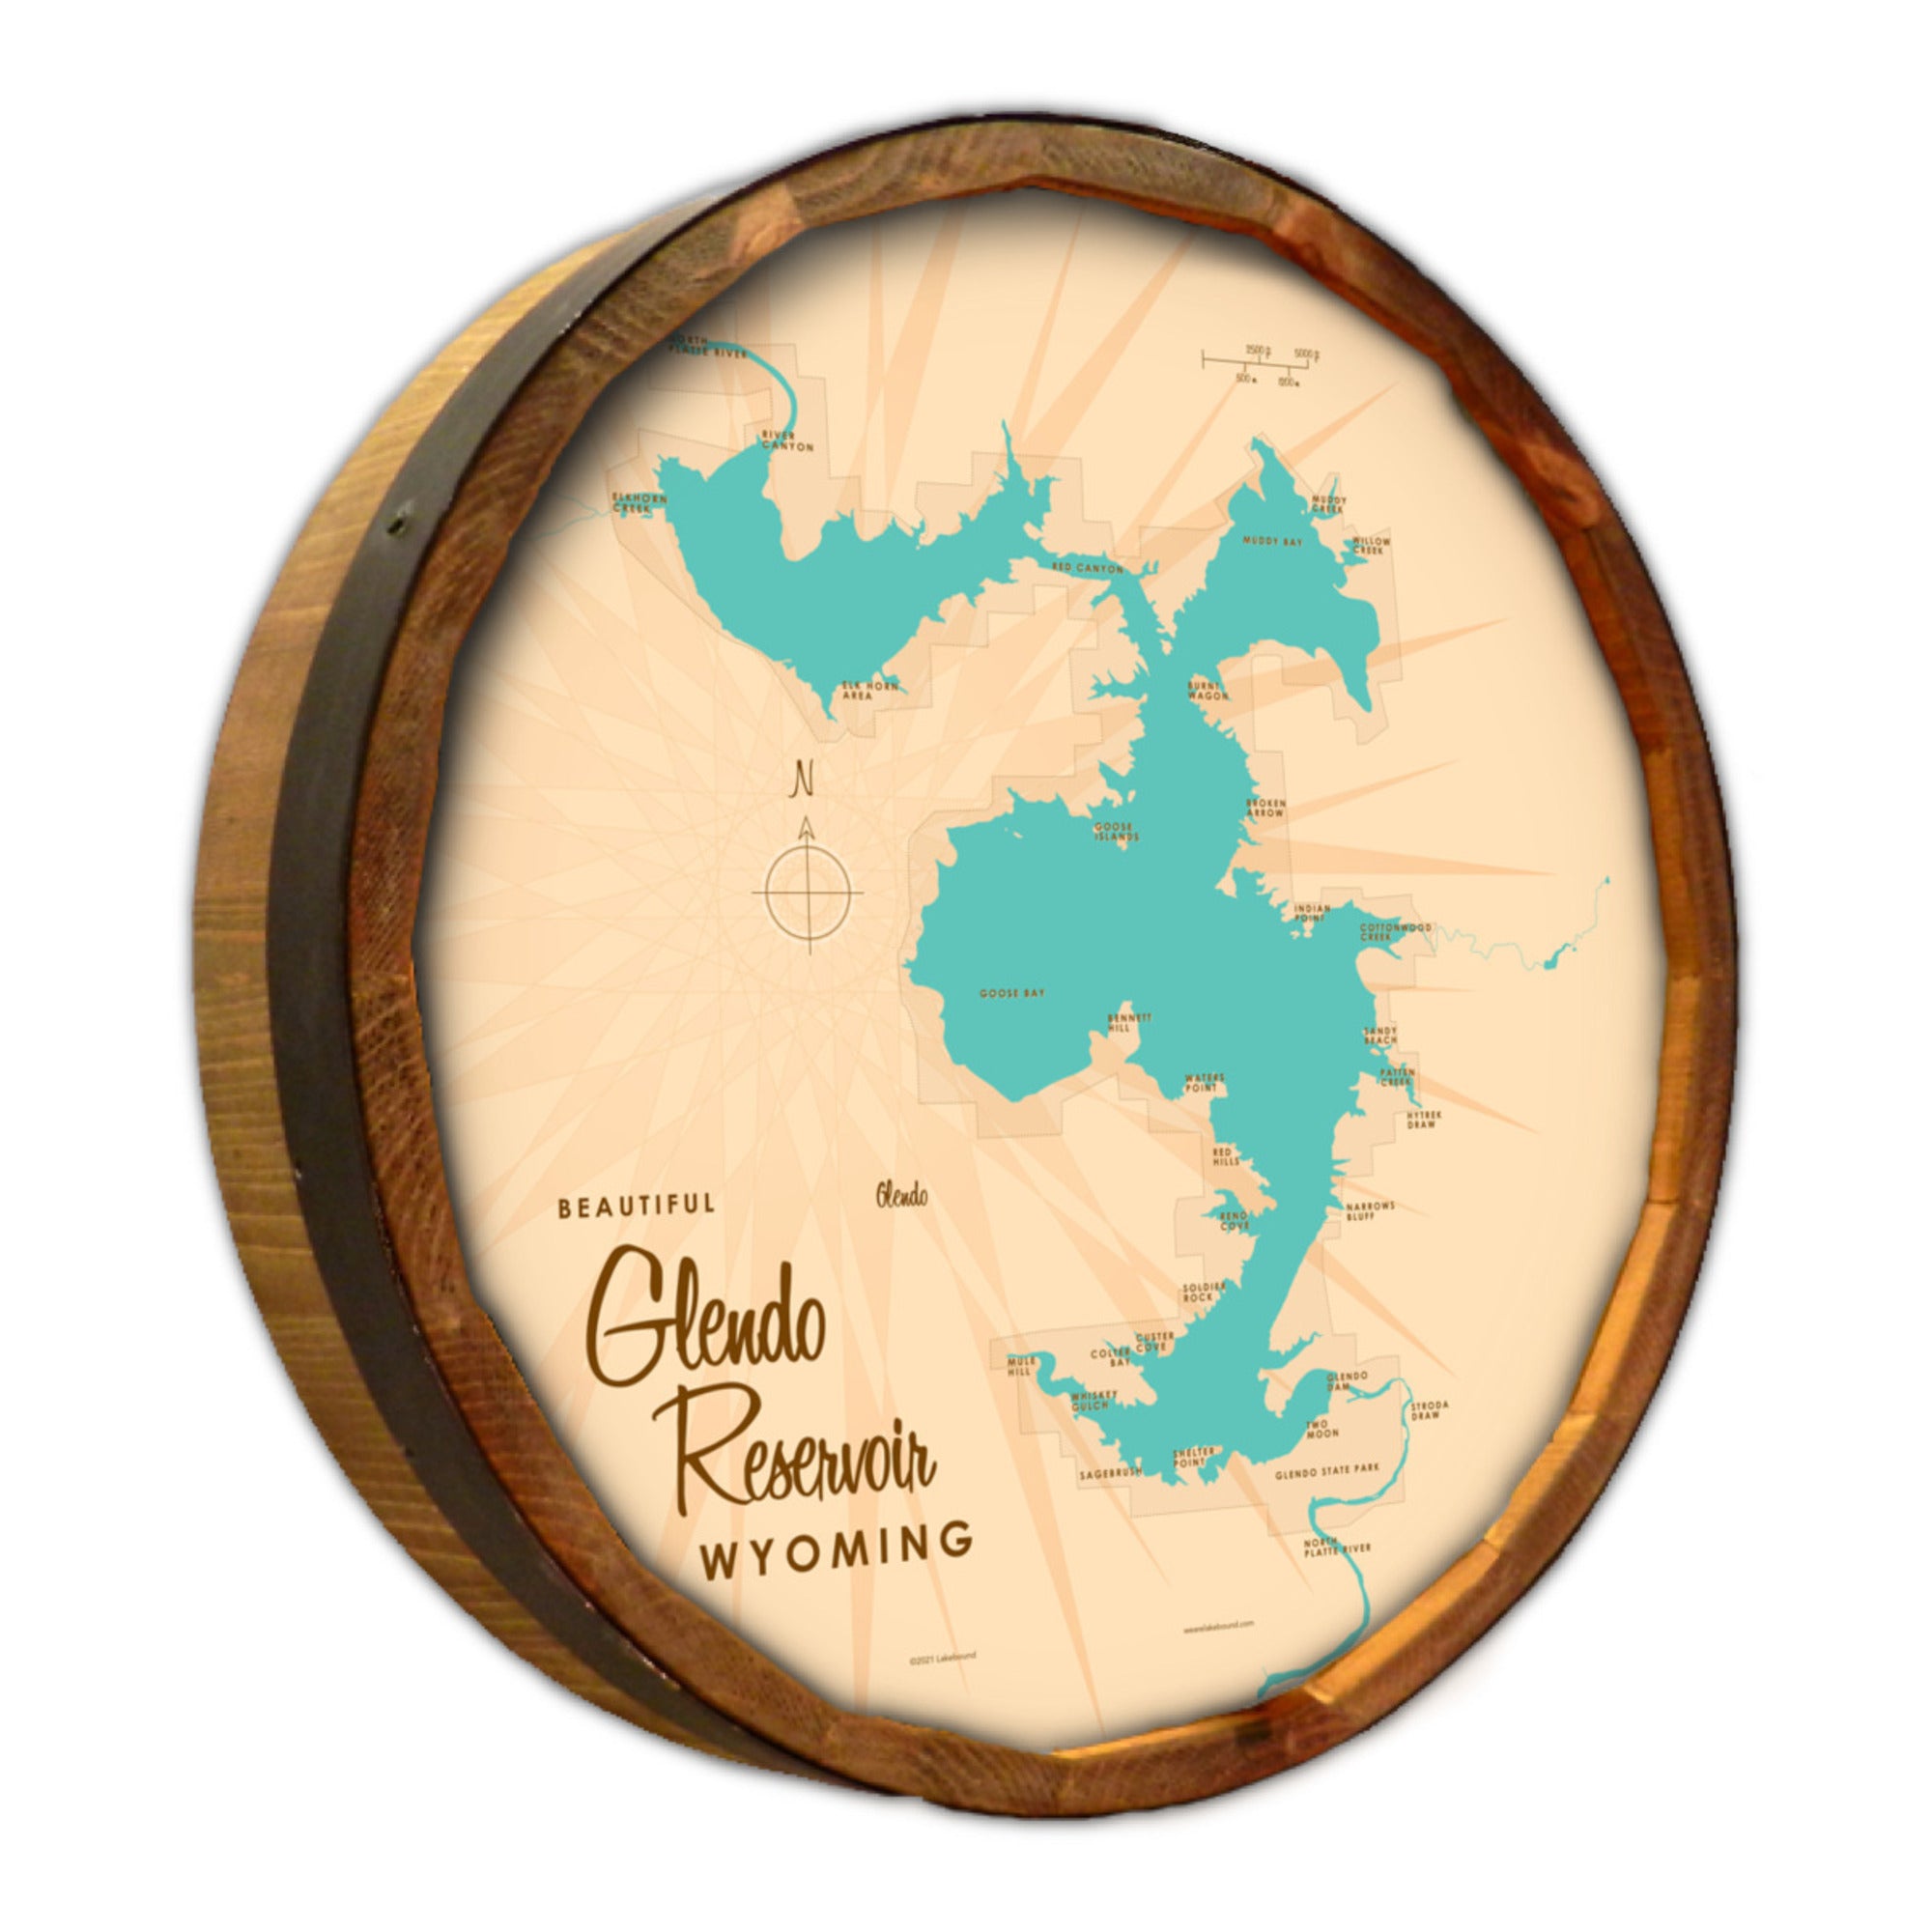 Glendo Reservoir Wyoming, Barrel End Map Art